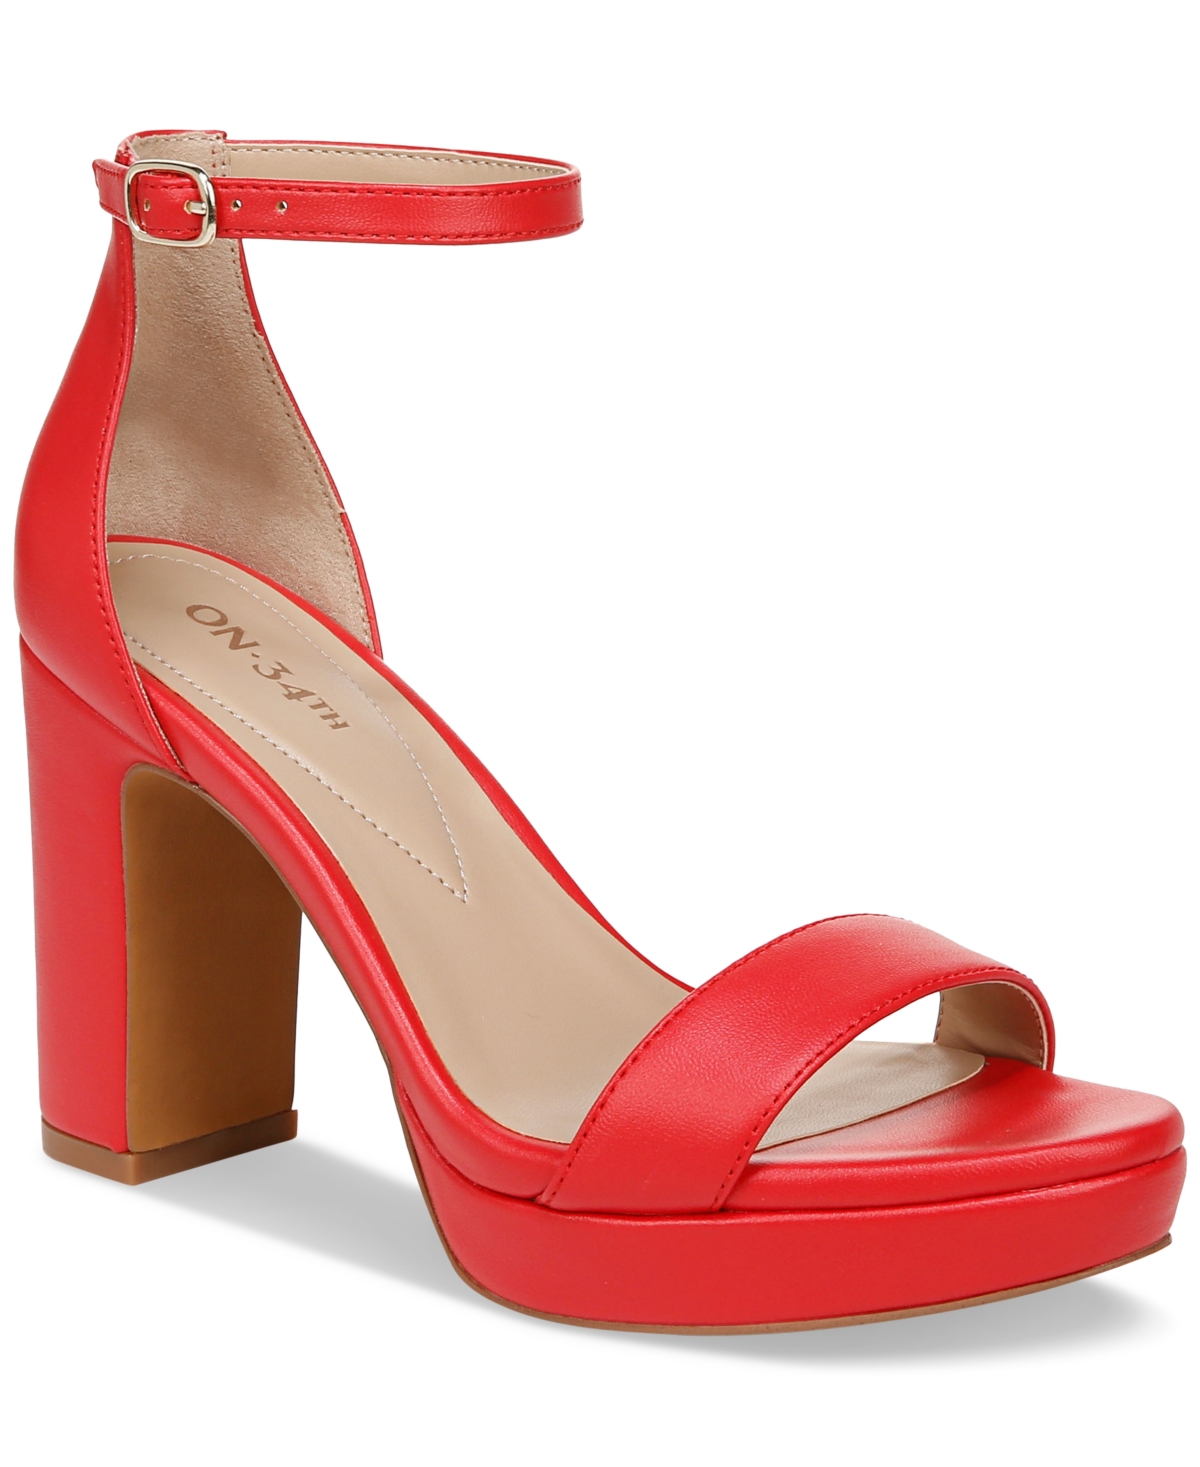 Women's Rannda Platform Dress Sandals, Created for Macy's - Red Smooth